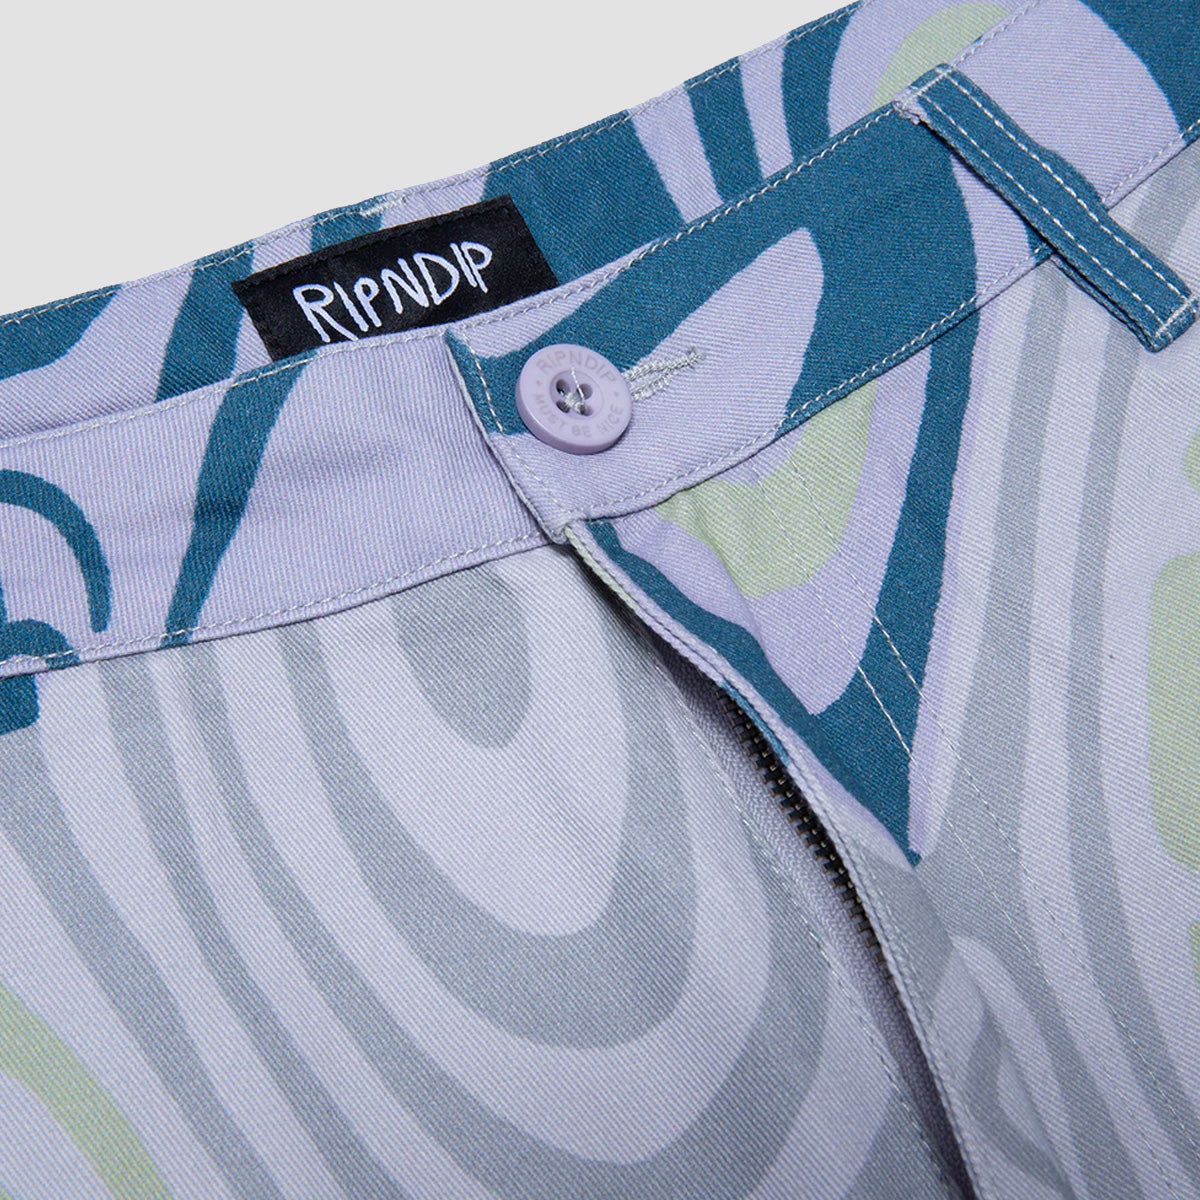 Ripndip Hypnotic Twill Shorts Grey/Lavender/Neon